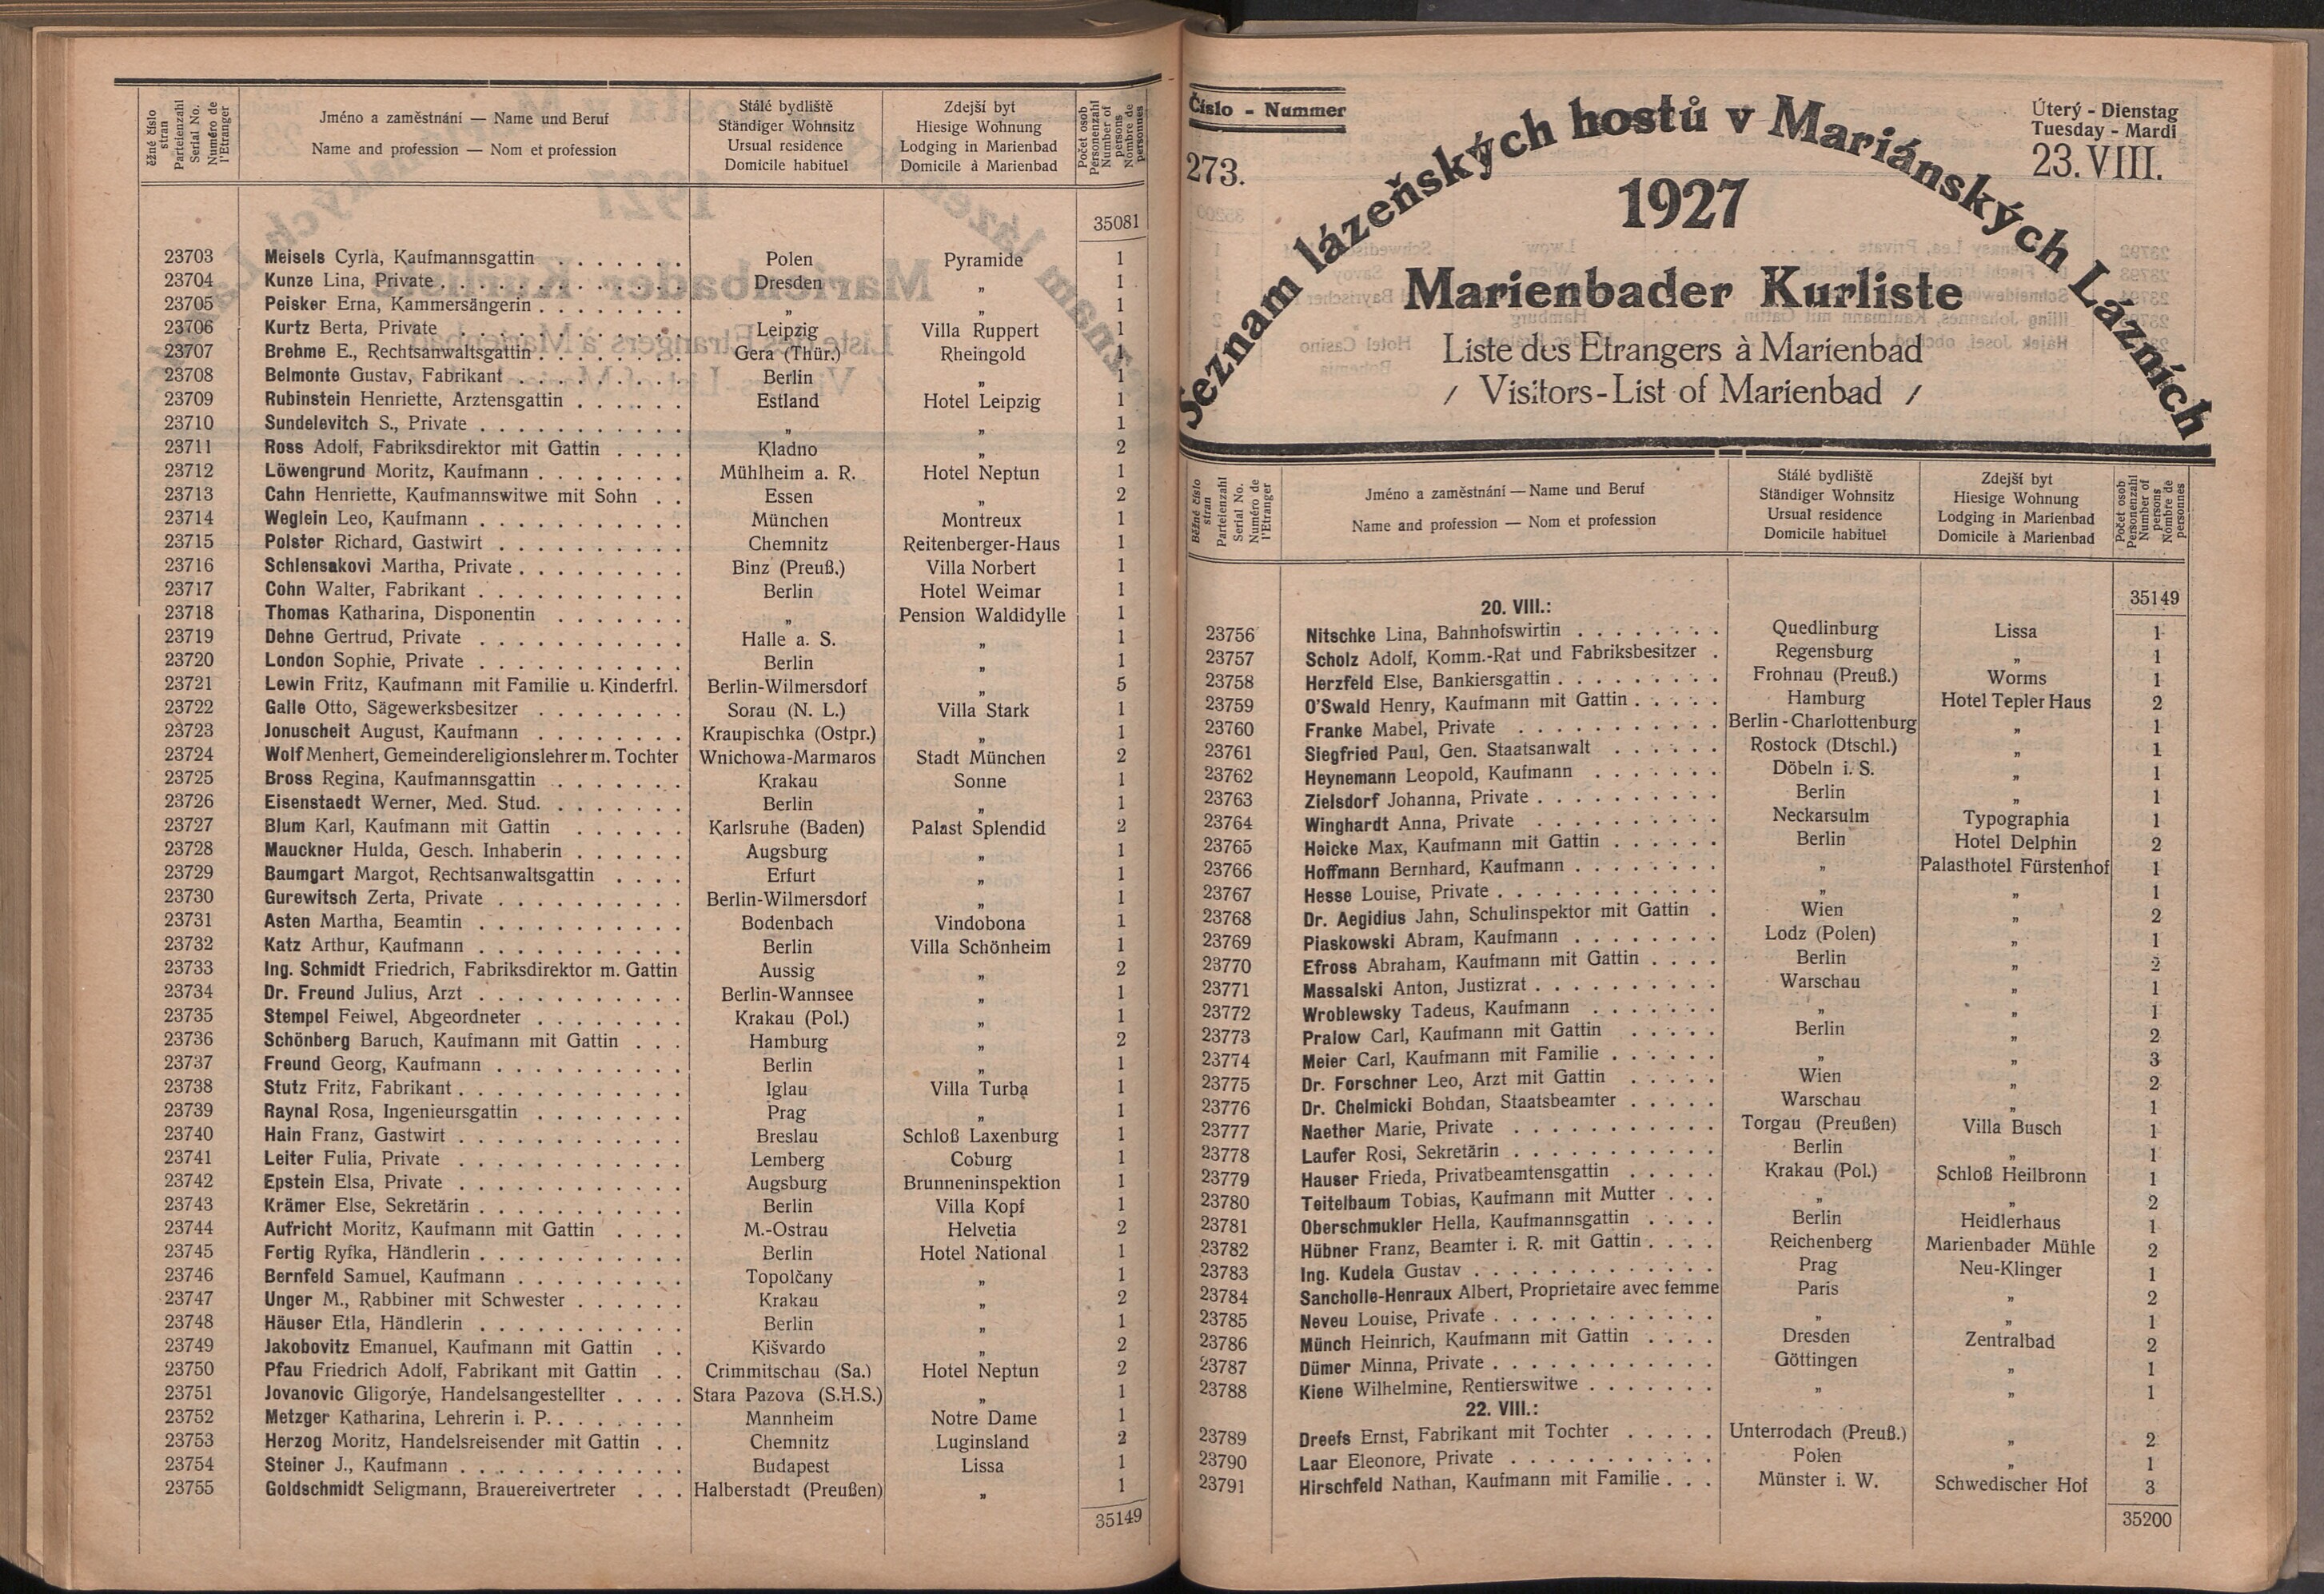 354. soap-ch_knihovna_marienbader-kurliste-1927_3540